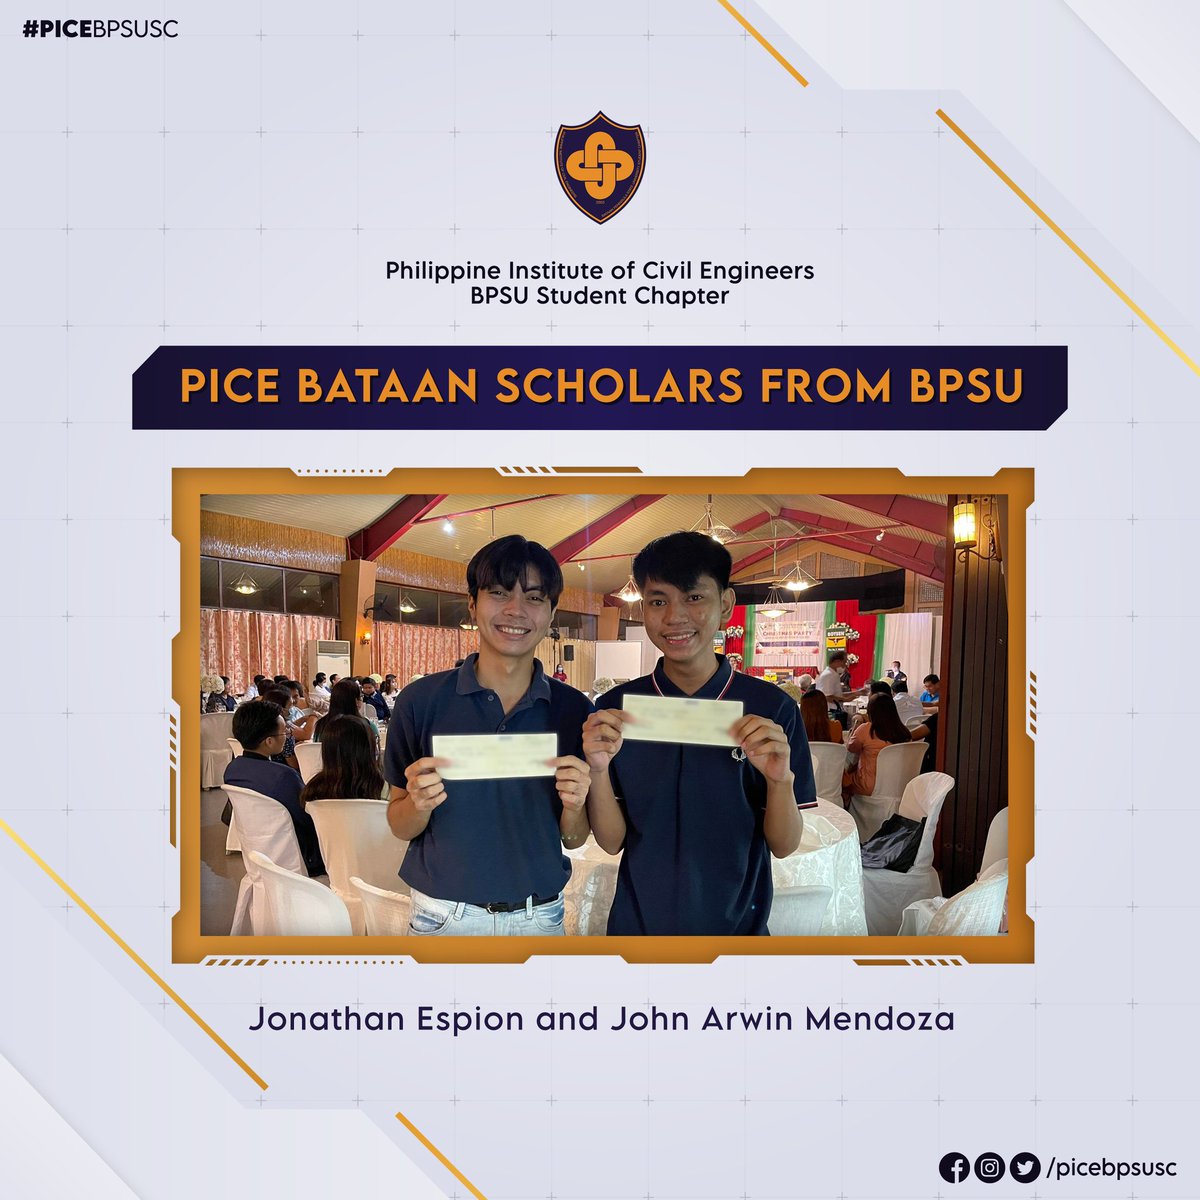 𝐓𝐇𝐀𝐍𝐊 𝐘𝐎𝐔, 𝐏𝐈𝐂𝐄 𝐁𝐀𝐓𝐀𝐀𝐍!

For granting two PICE Bataan Scholars, Jonathan Espion and John Arwin Mendoza from BPSU Civil Engineering.

#PICEBATAANSCHOLARS
#PICElebration
#PICEBPSUSC